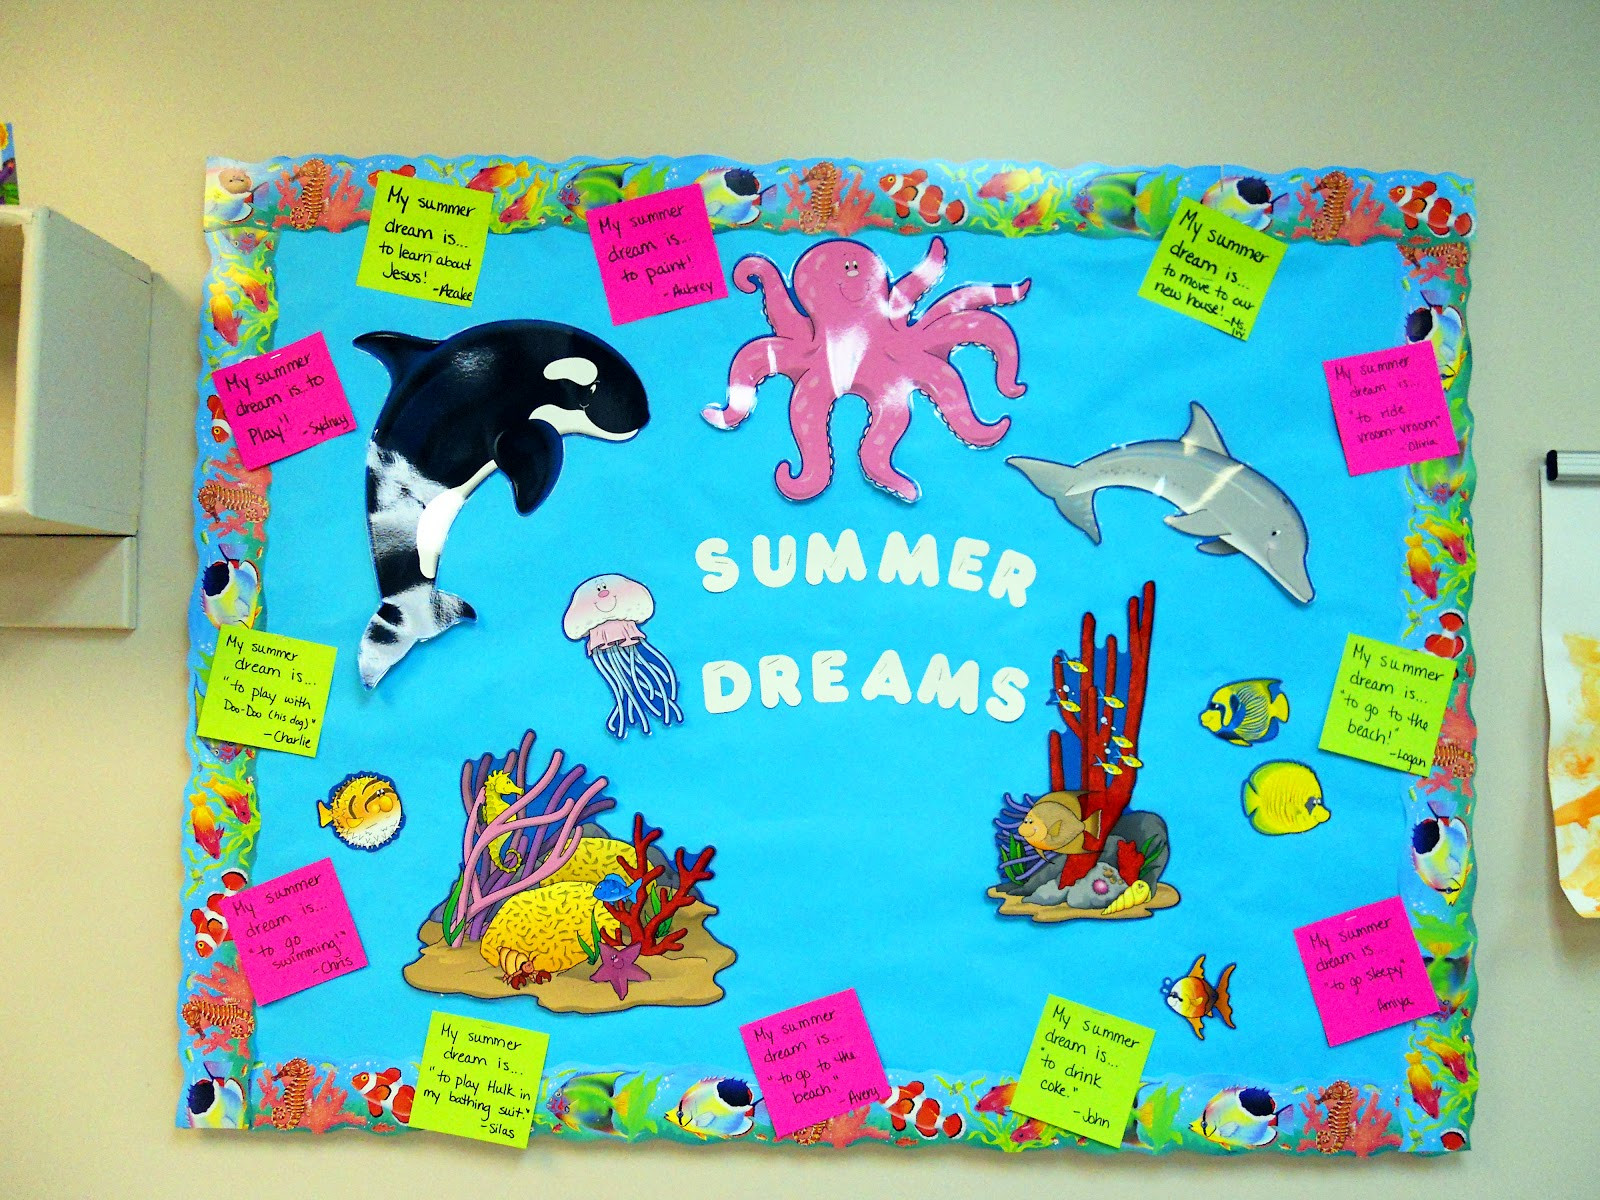 Summer Camp Bulletin Board Ideas
 A walk in my shoes "Summer Dreams" Bulletin Board Idea